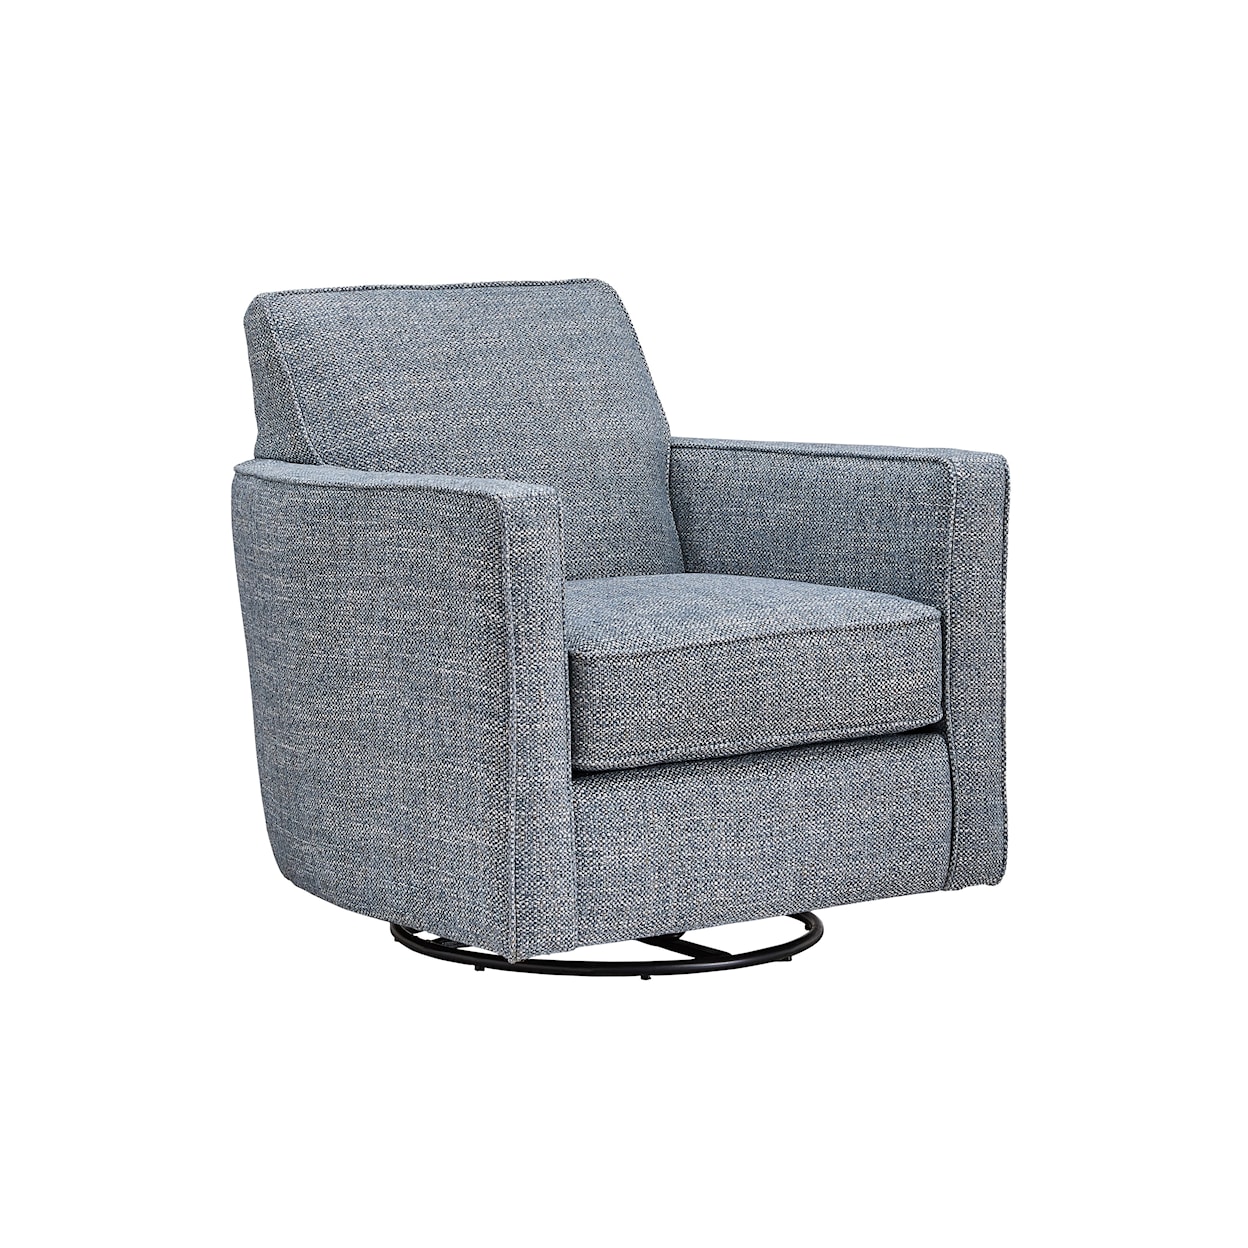 Fusion Furniture 49 JONAH FOAM Swivel Glider Chair